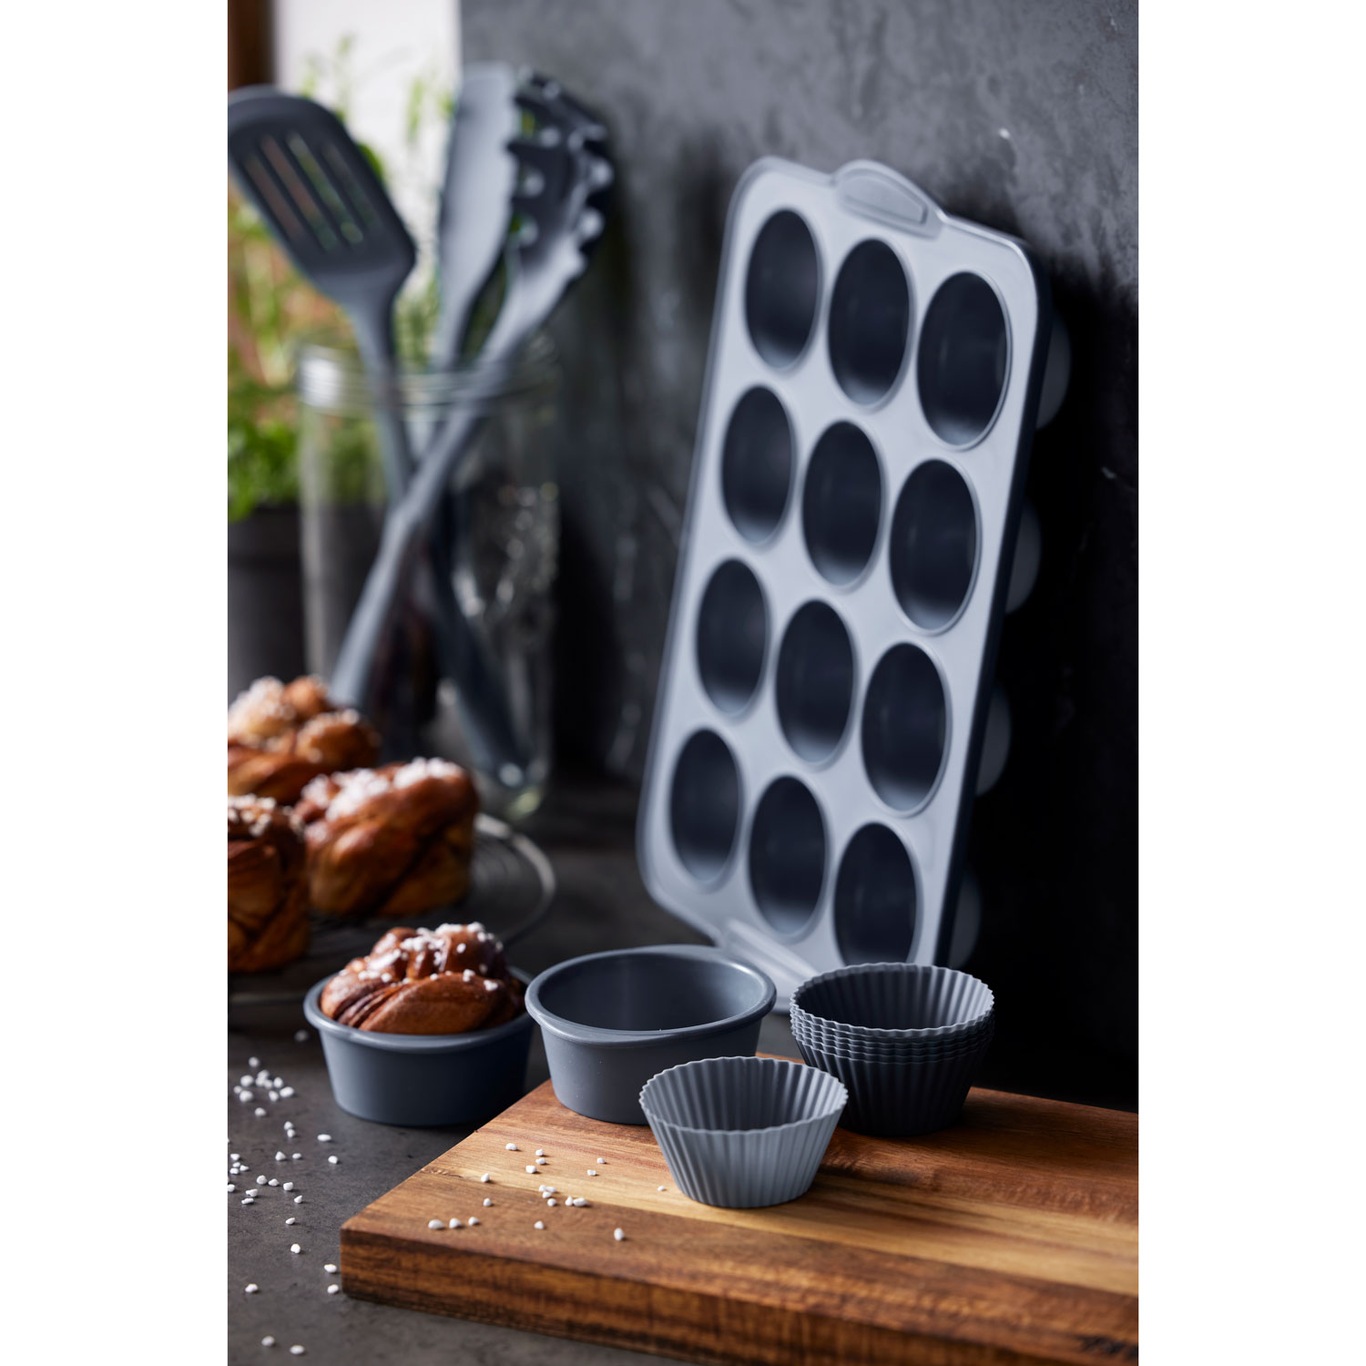 https://royaldesign.com/image/2/kitchenware-by-tareq-taylor-pecan-muffin-tin-33x24-cm-0?w=800&quality=80